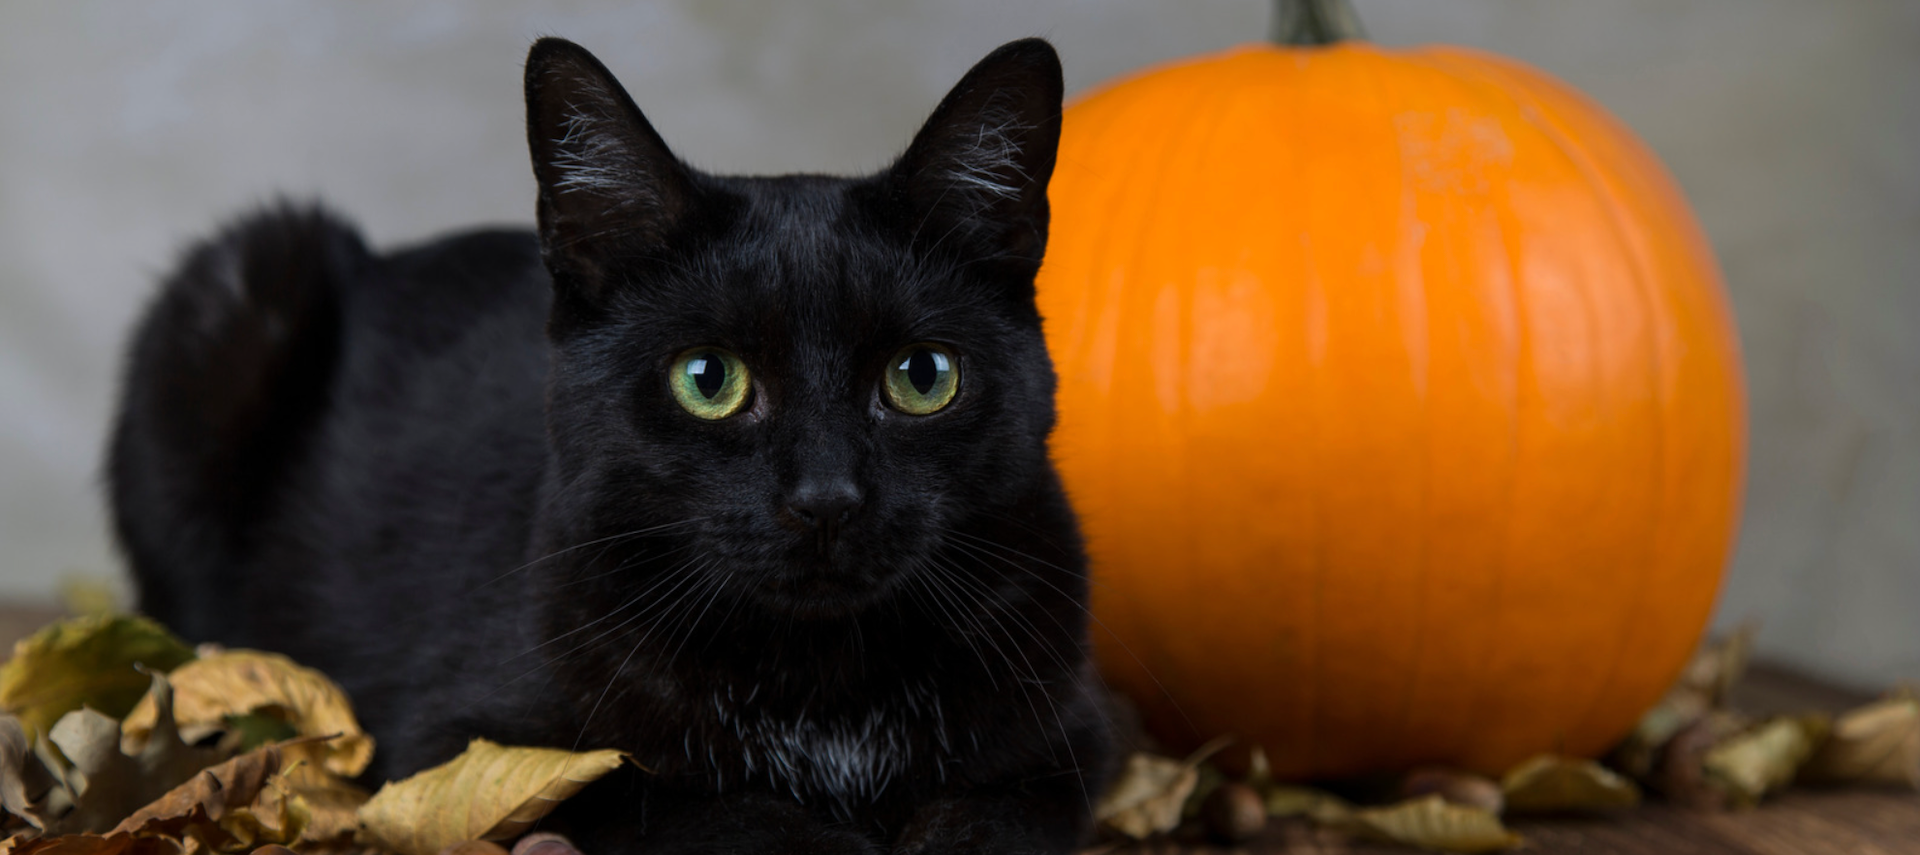 black cat sitting next to pumpkin